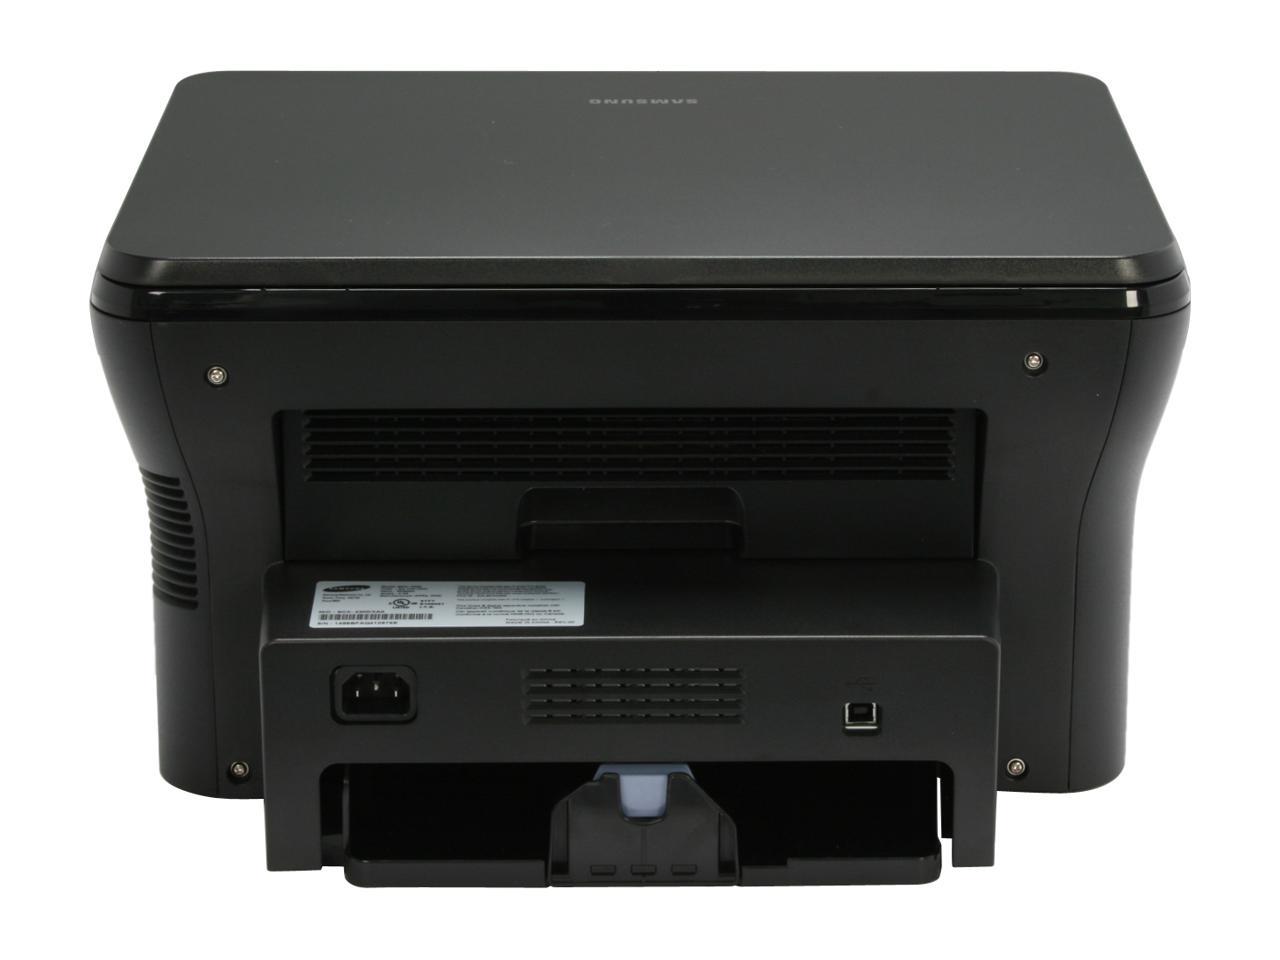 SAMSUNG SCX-4300 MFC / All-In-One Monochrome Laser Printer ...